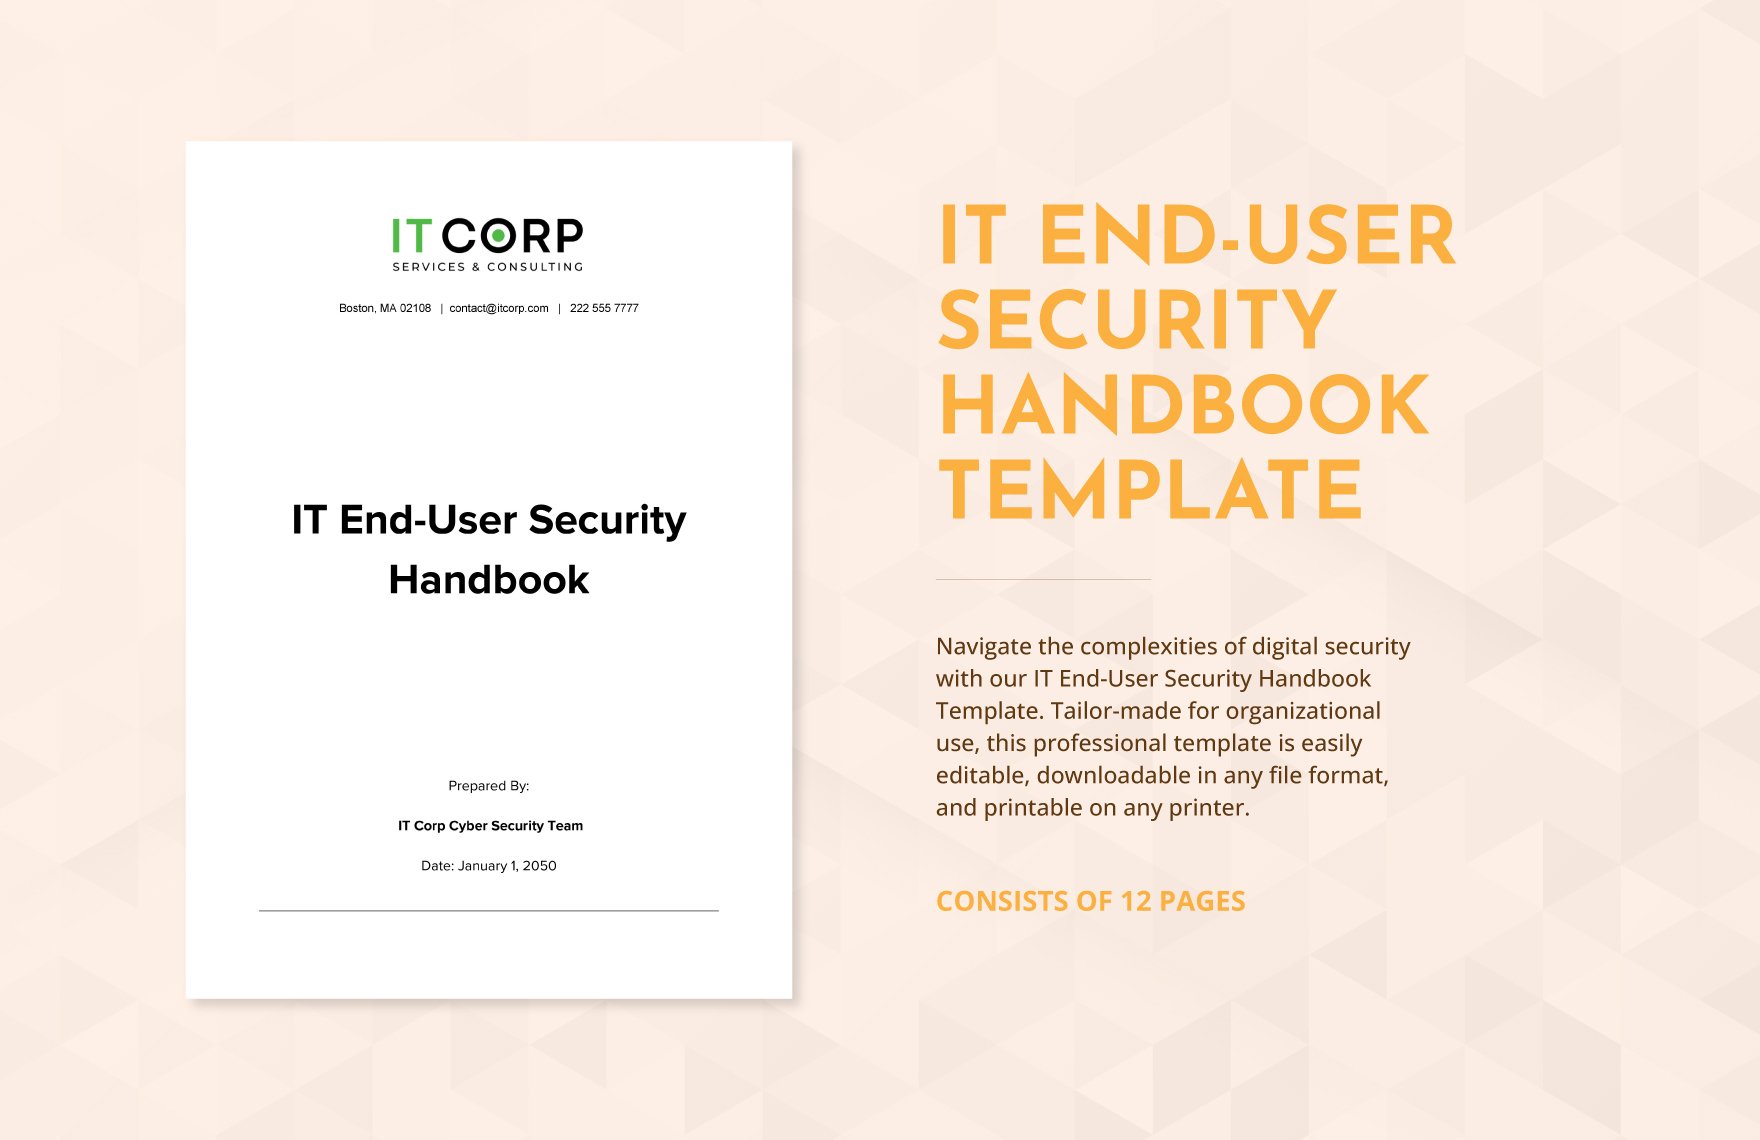 IT End-User Security Handbook Template